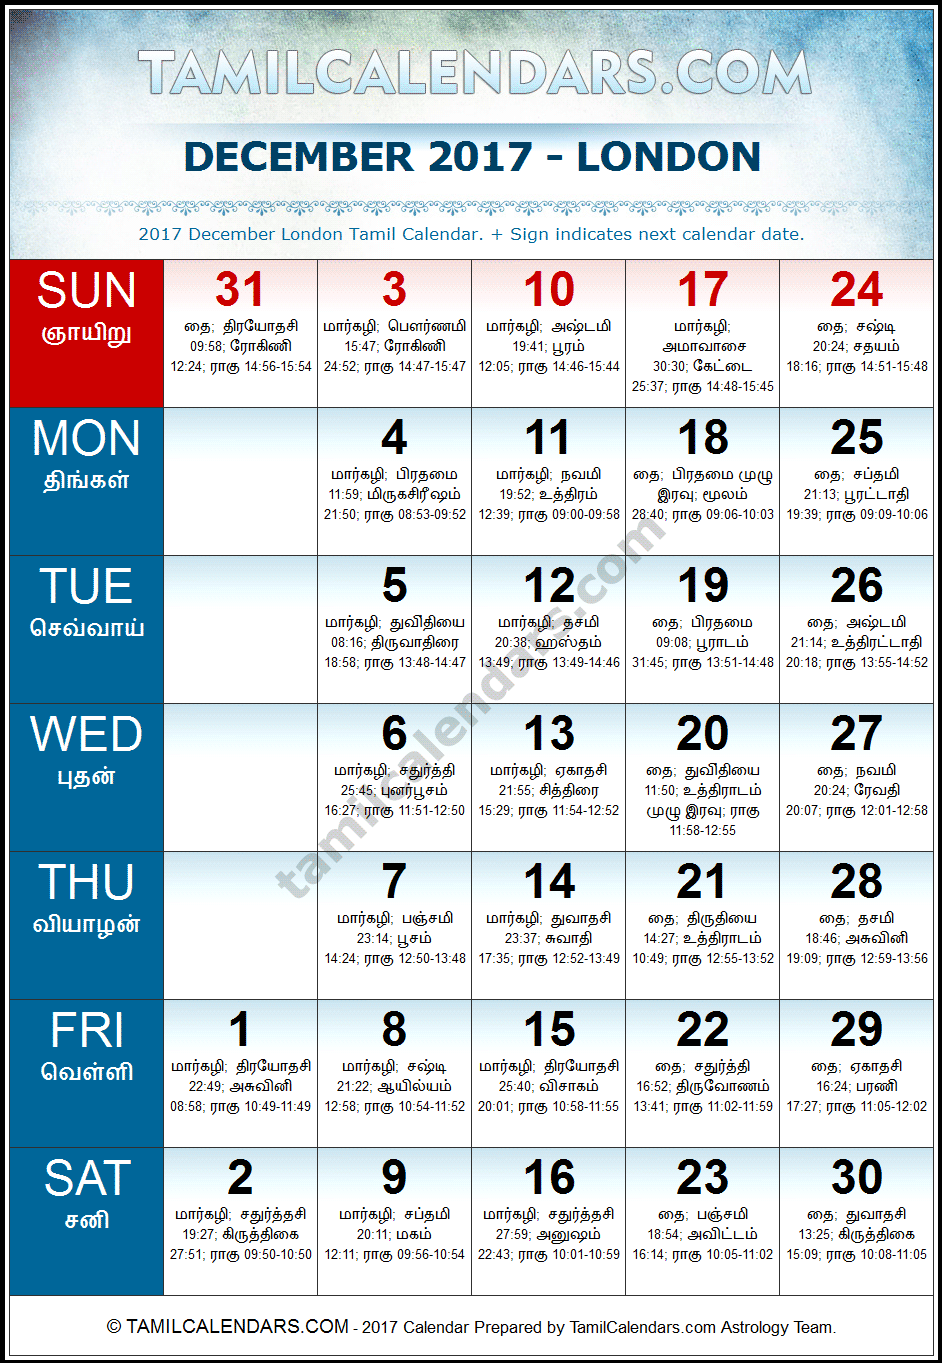 December 2017 Tamil Calendar for London, UK